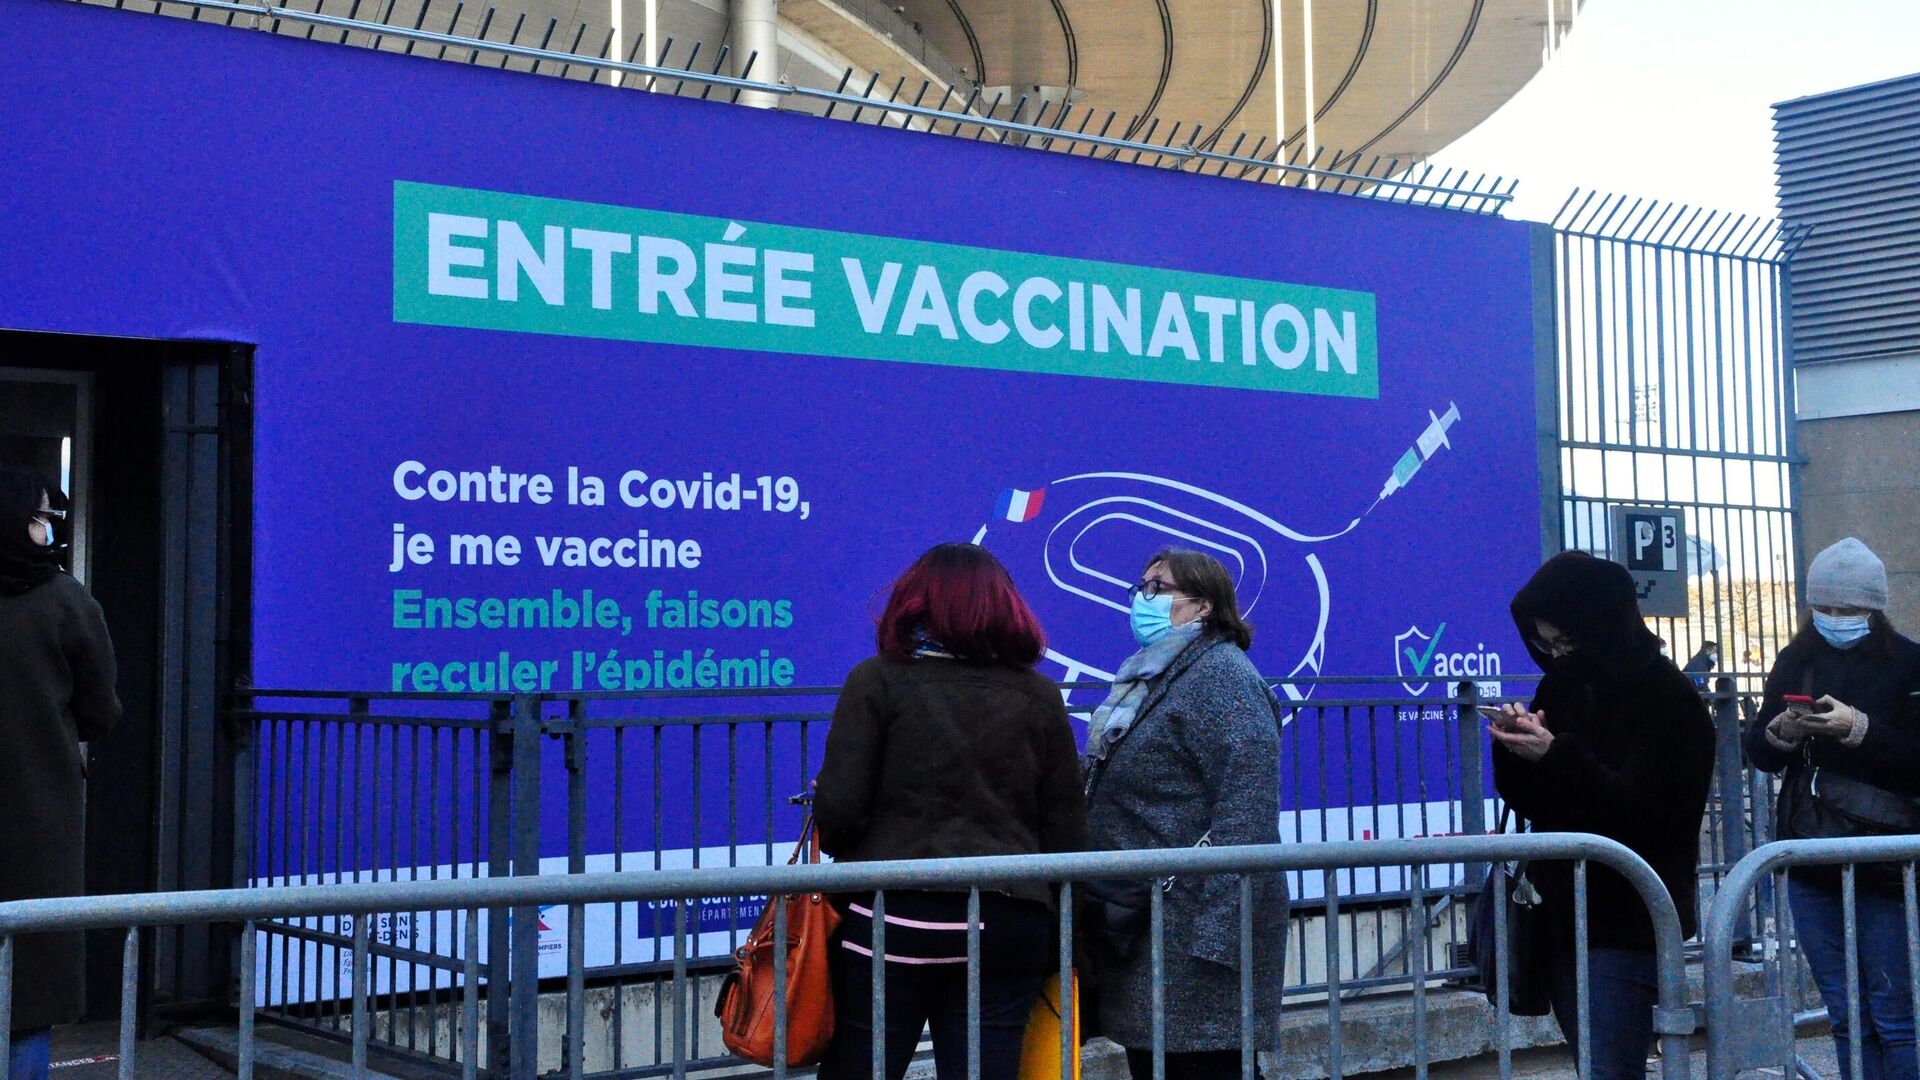 Местные жители стоят в очереди на вакцинацию от коронавируса в центре вакцинодроме на стадионе Стад де Франс - РИА Новости, 1920, 17.12.2021